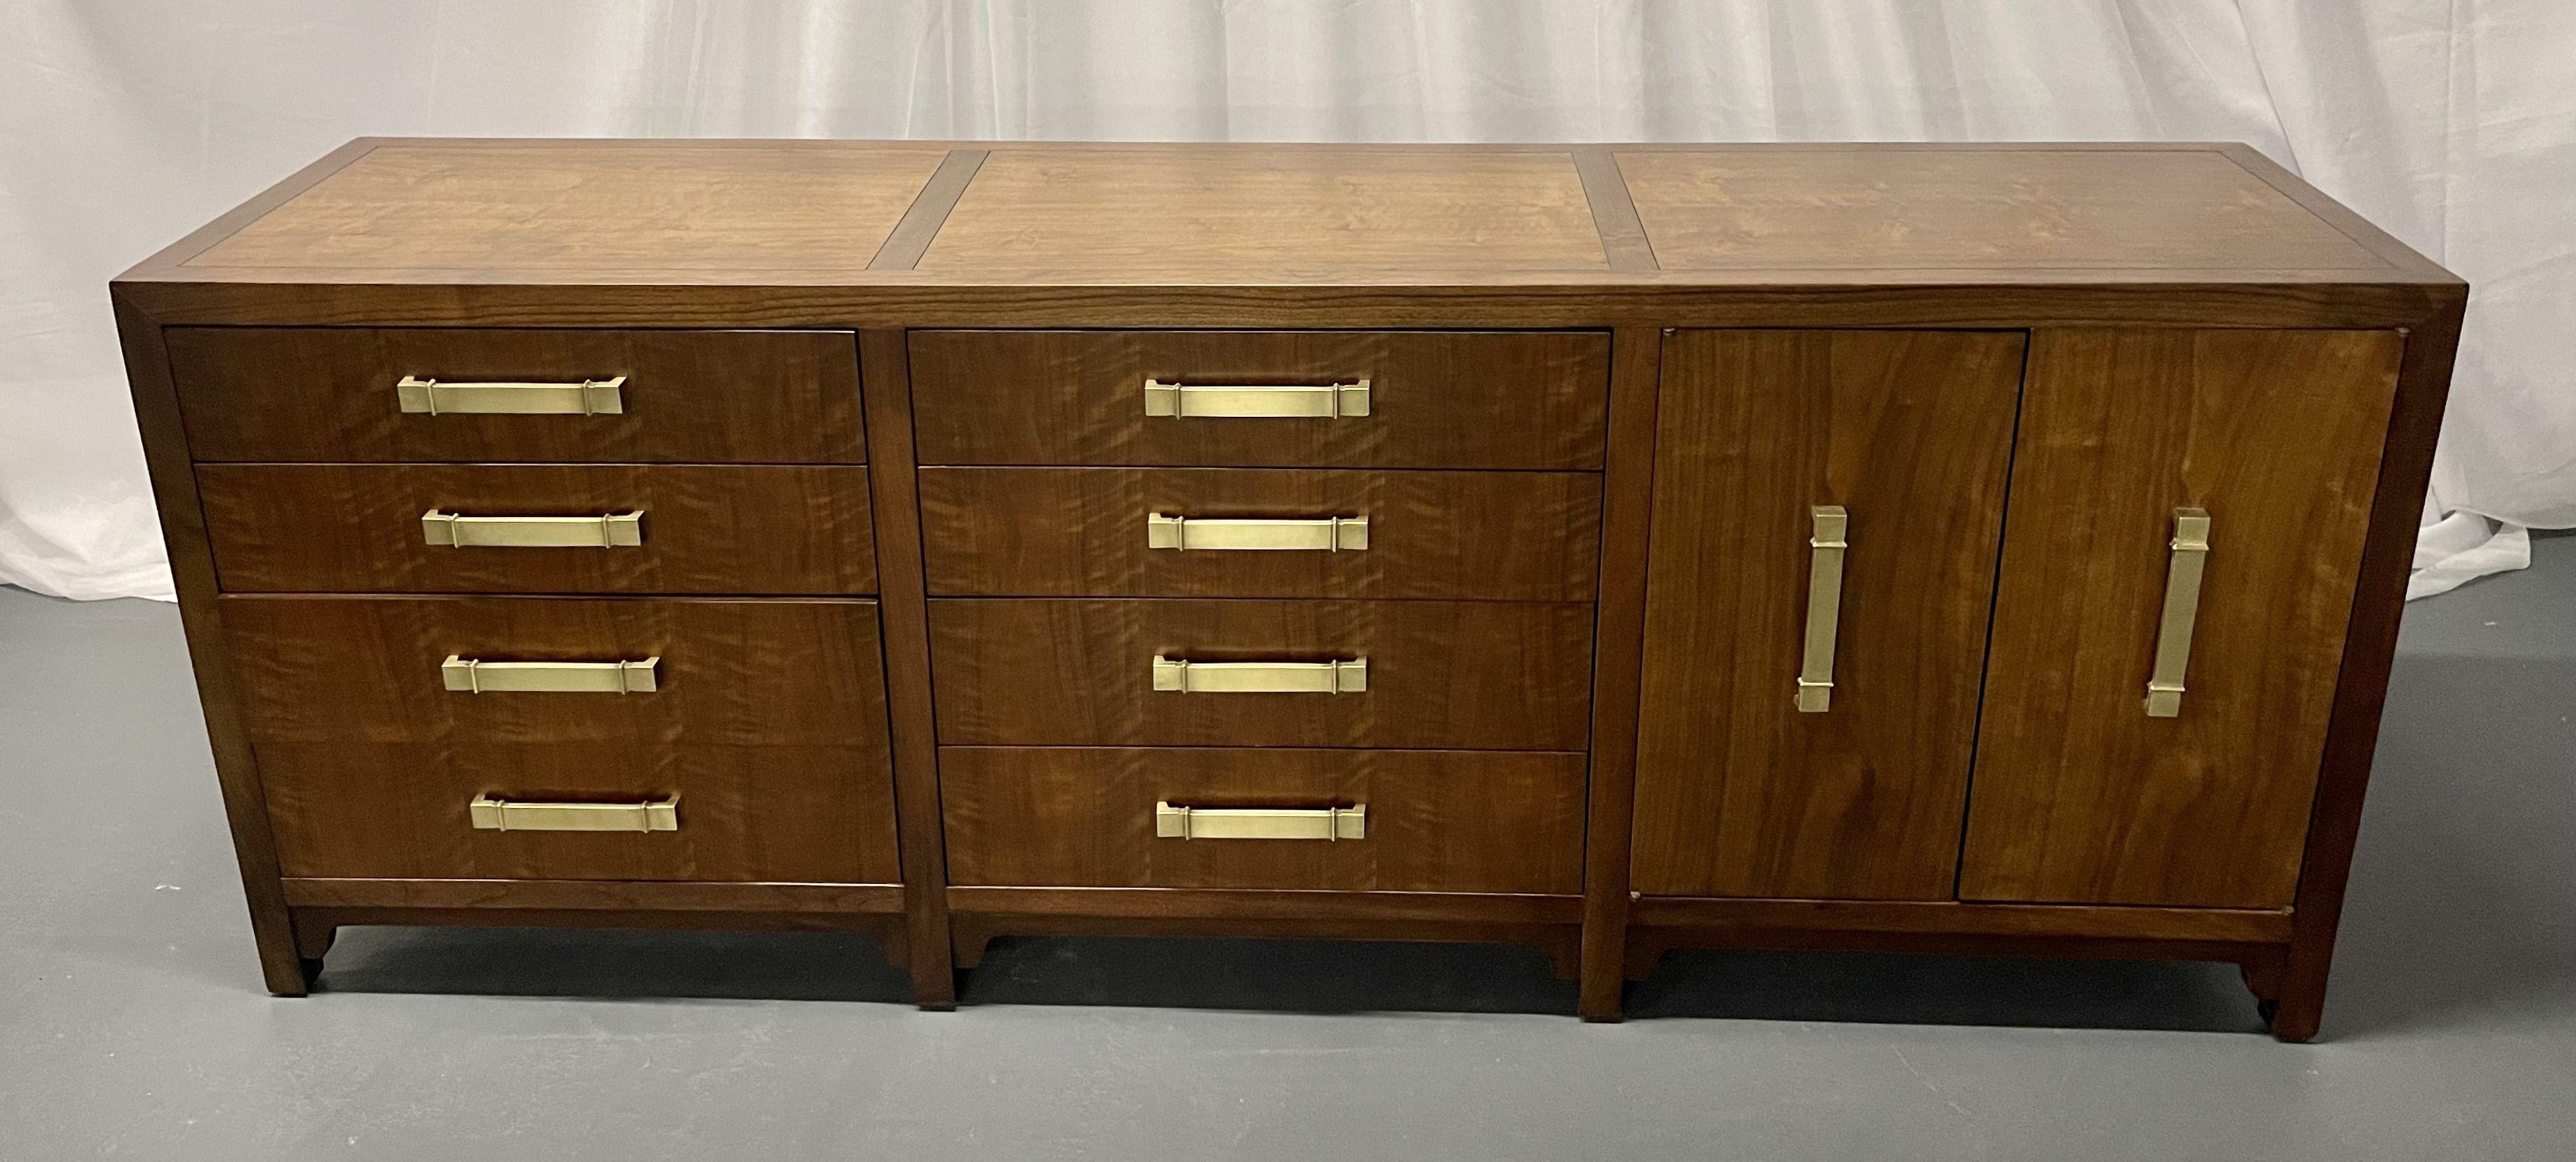 Mid-20th Century Mid-Century Modern Dresser/Sideboard/Cabinet, American, Walnut, Brass Accents